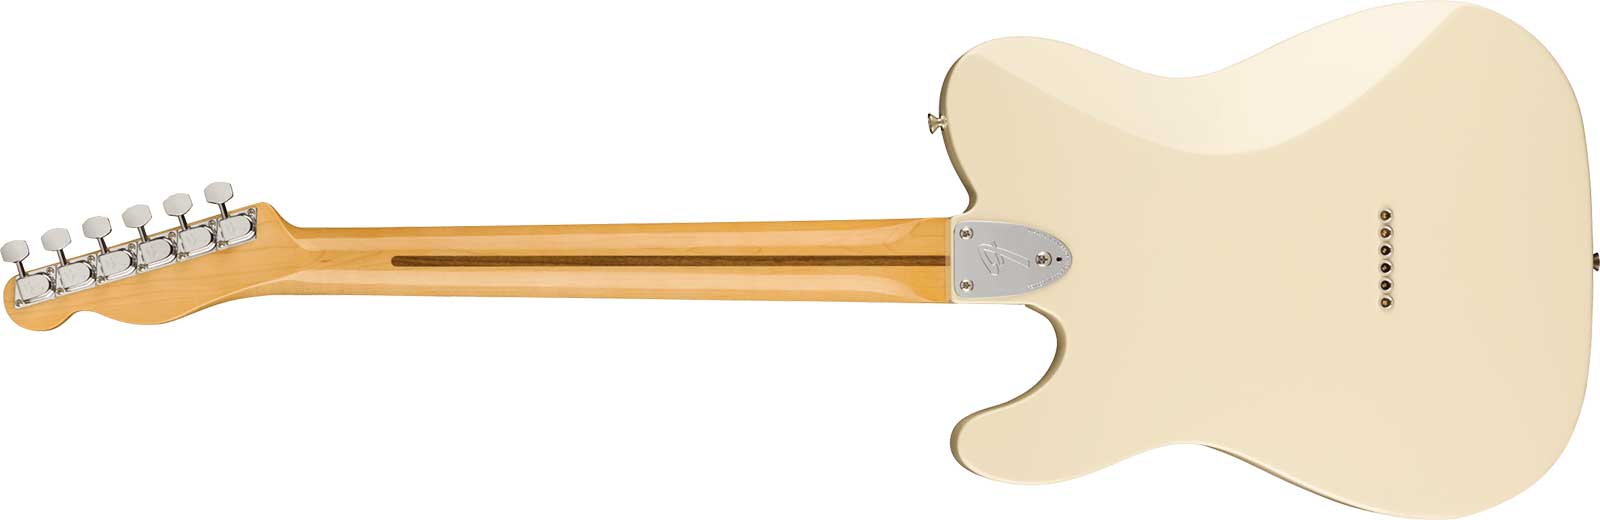 Fender Tele Custom 1977 American Vintage Ii Ltd Usa Sh Ht Rw - Olympic White - Televorm elektrische gitaar - Variation 1